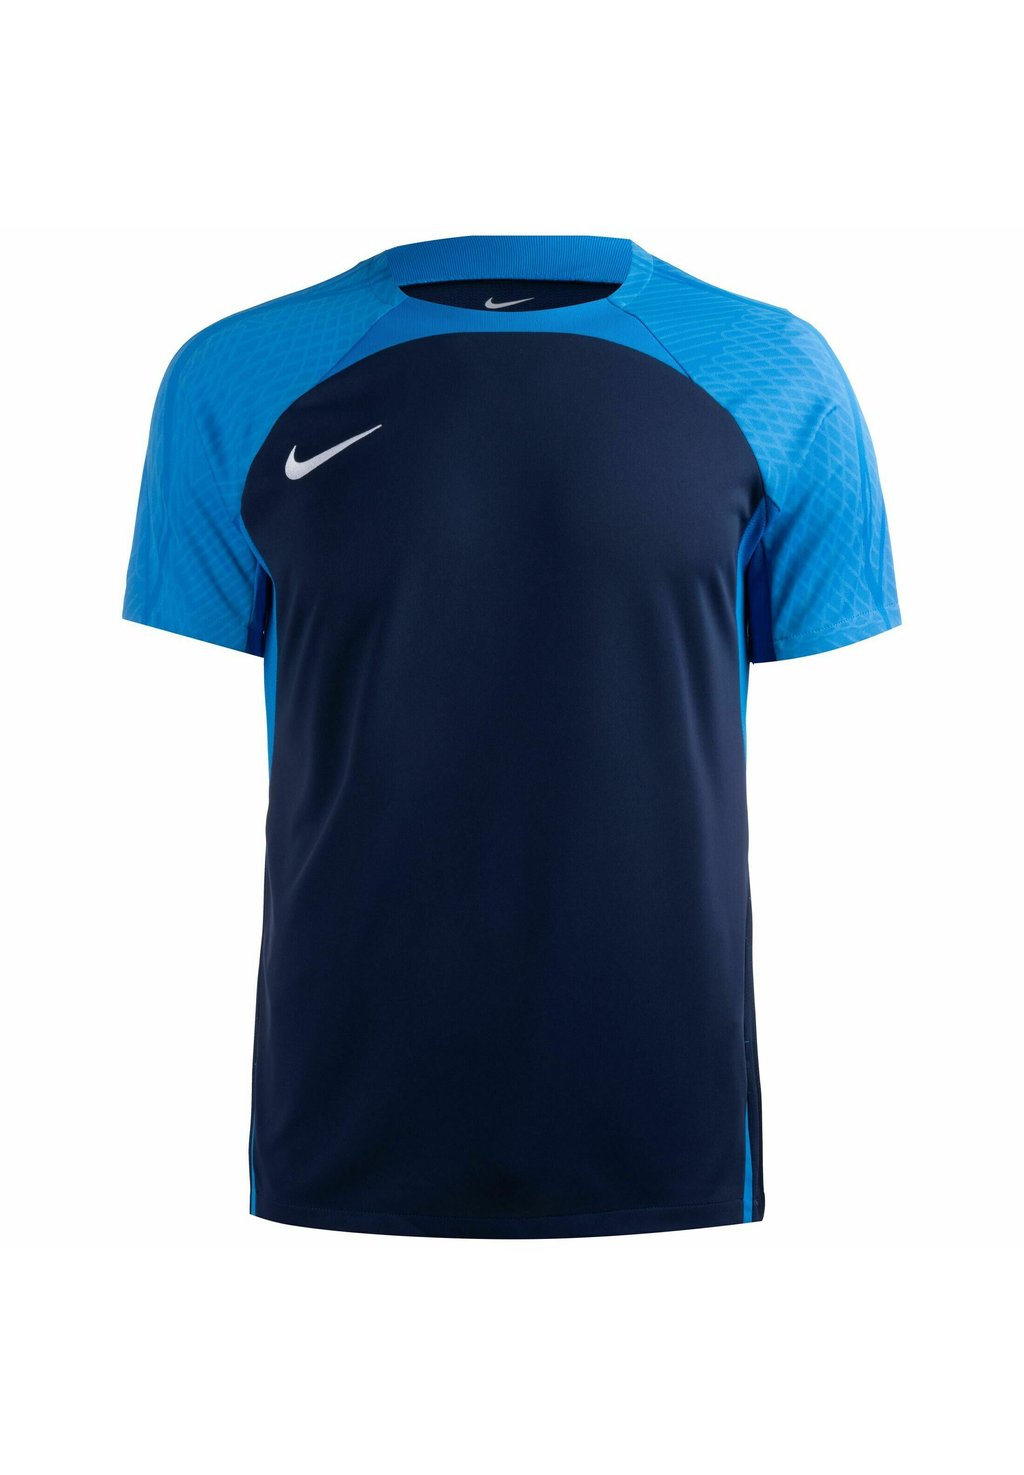 Спортивная футболка Strike Iii Fussball Nike, цвет midnight navy photo blue white